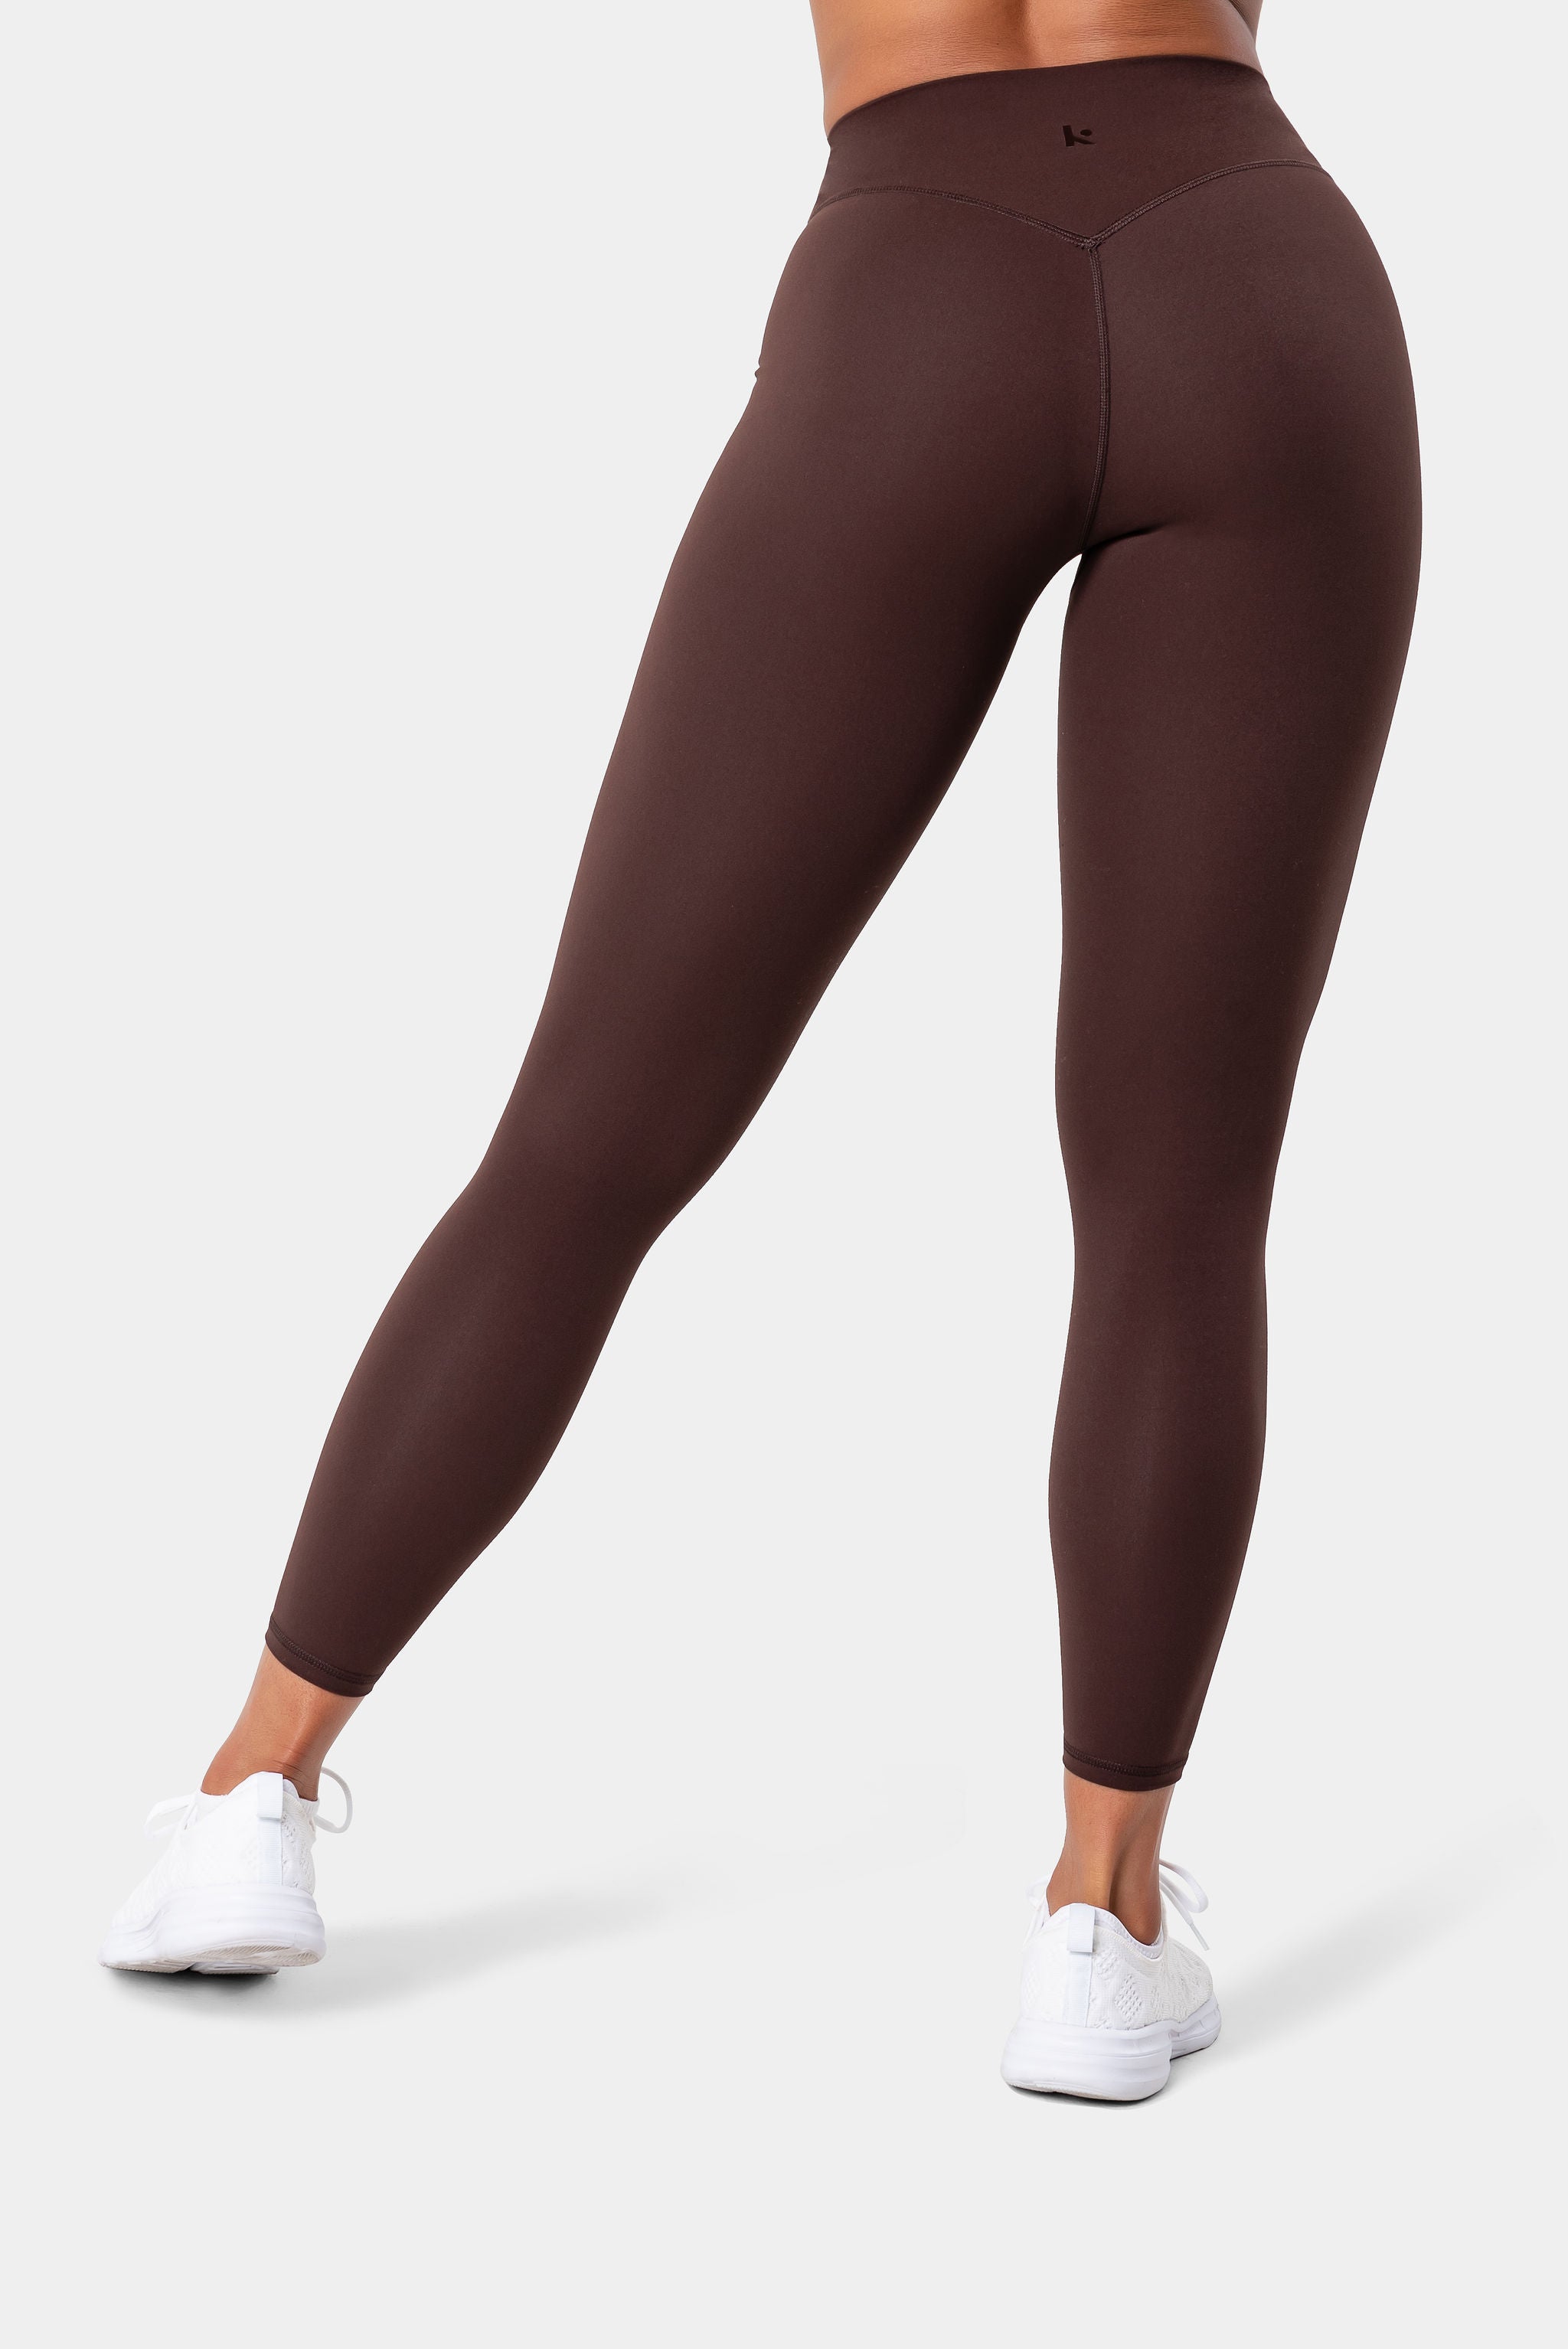 Kamo Fitness, Pants & Jumpsuits, Kamo Fitness Featherlite Enhance Leggings  25 Color Loden Frost Size M